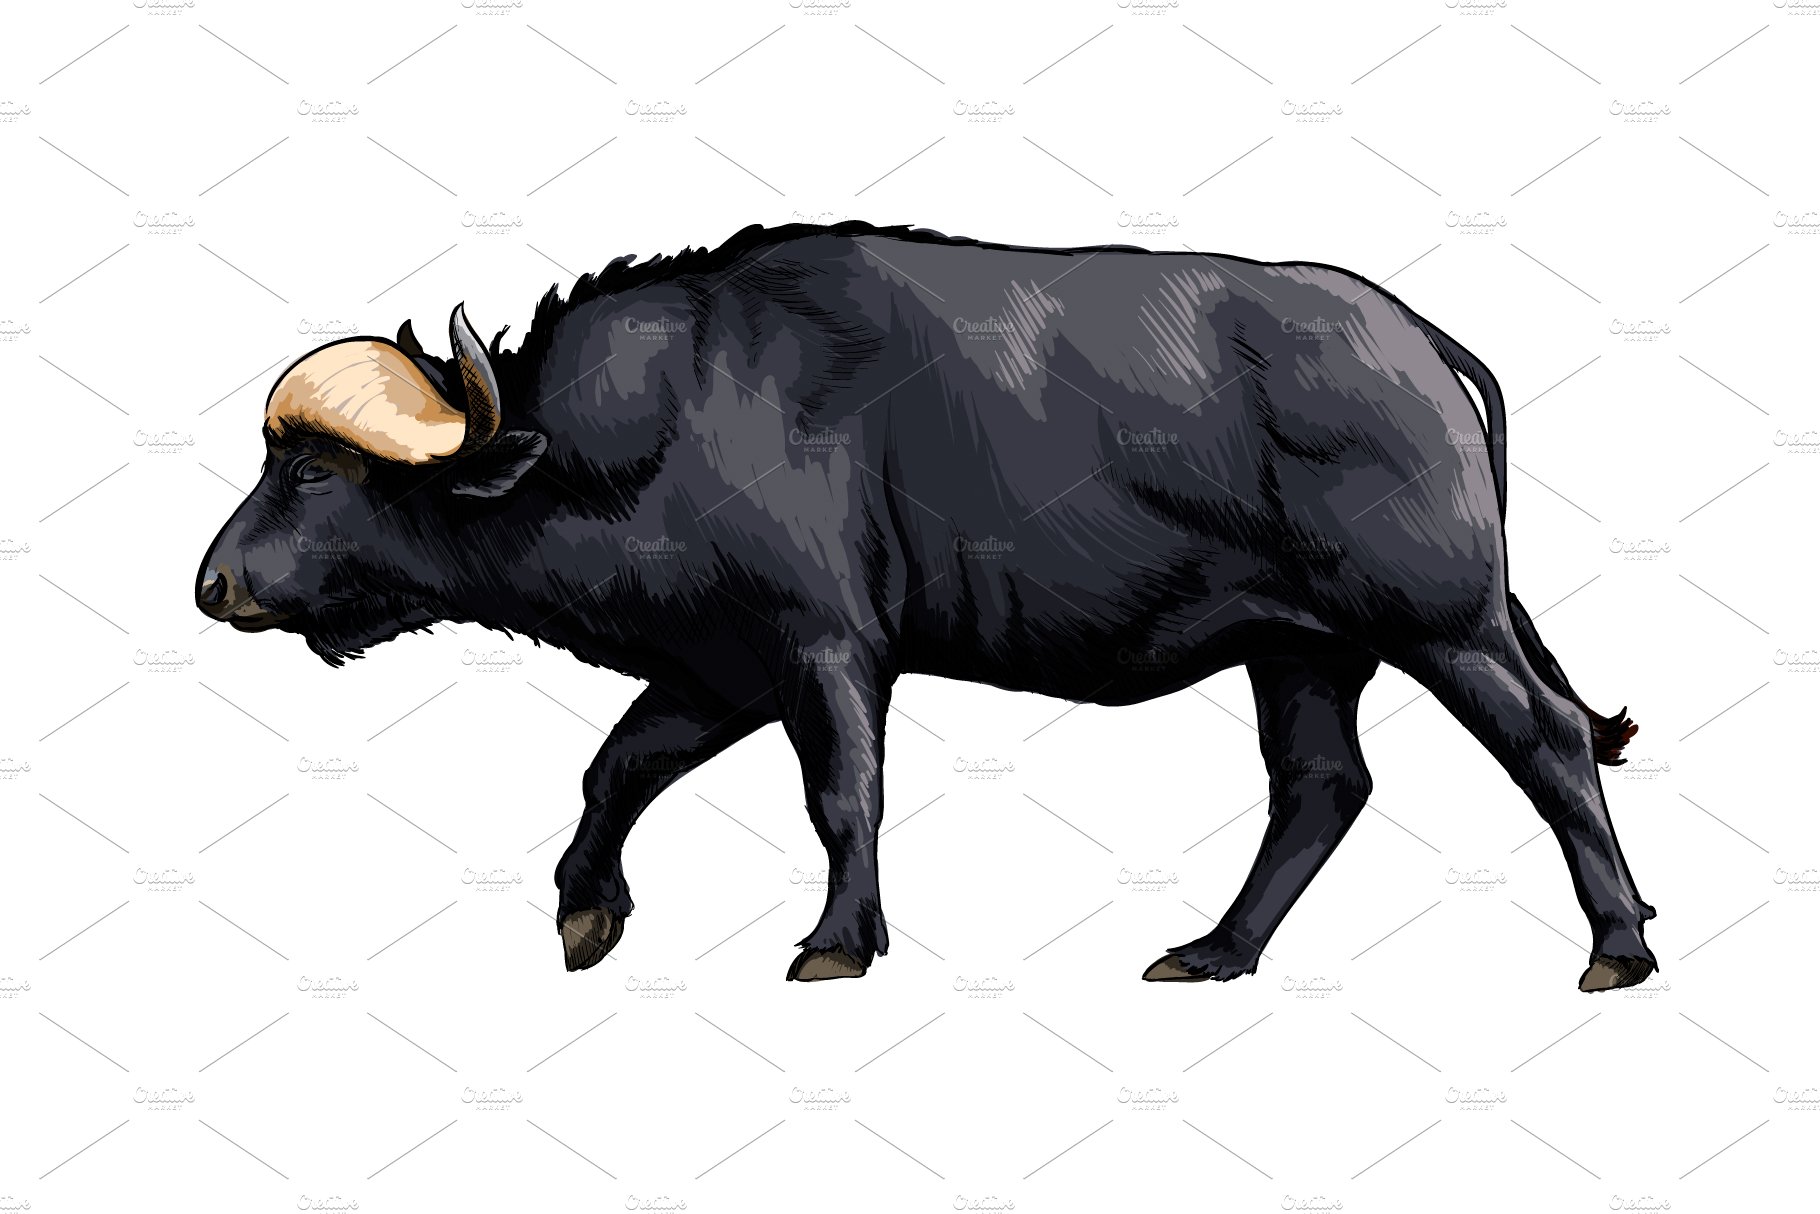 Bison, buffalo cover image.